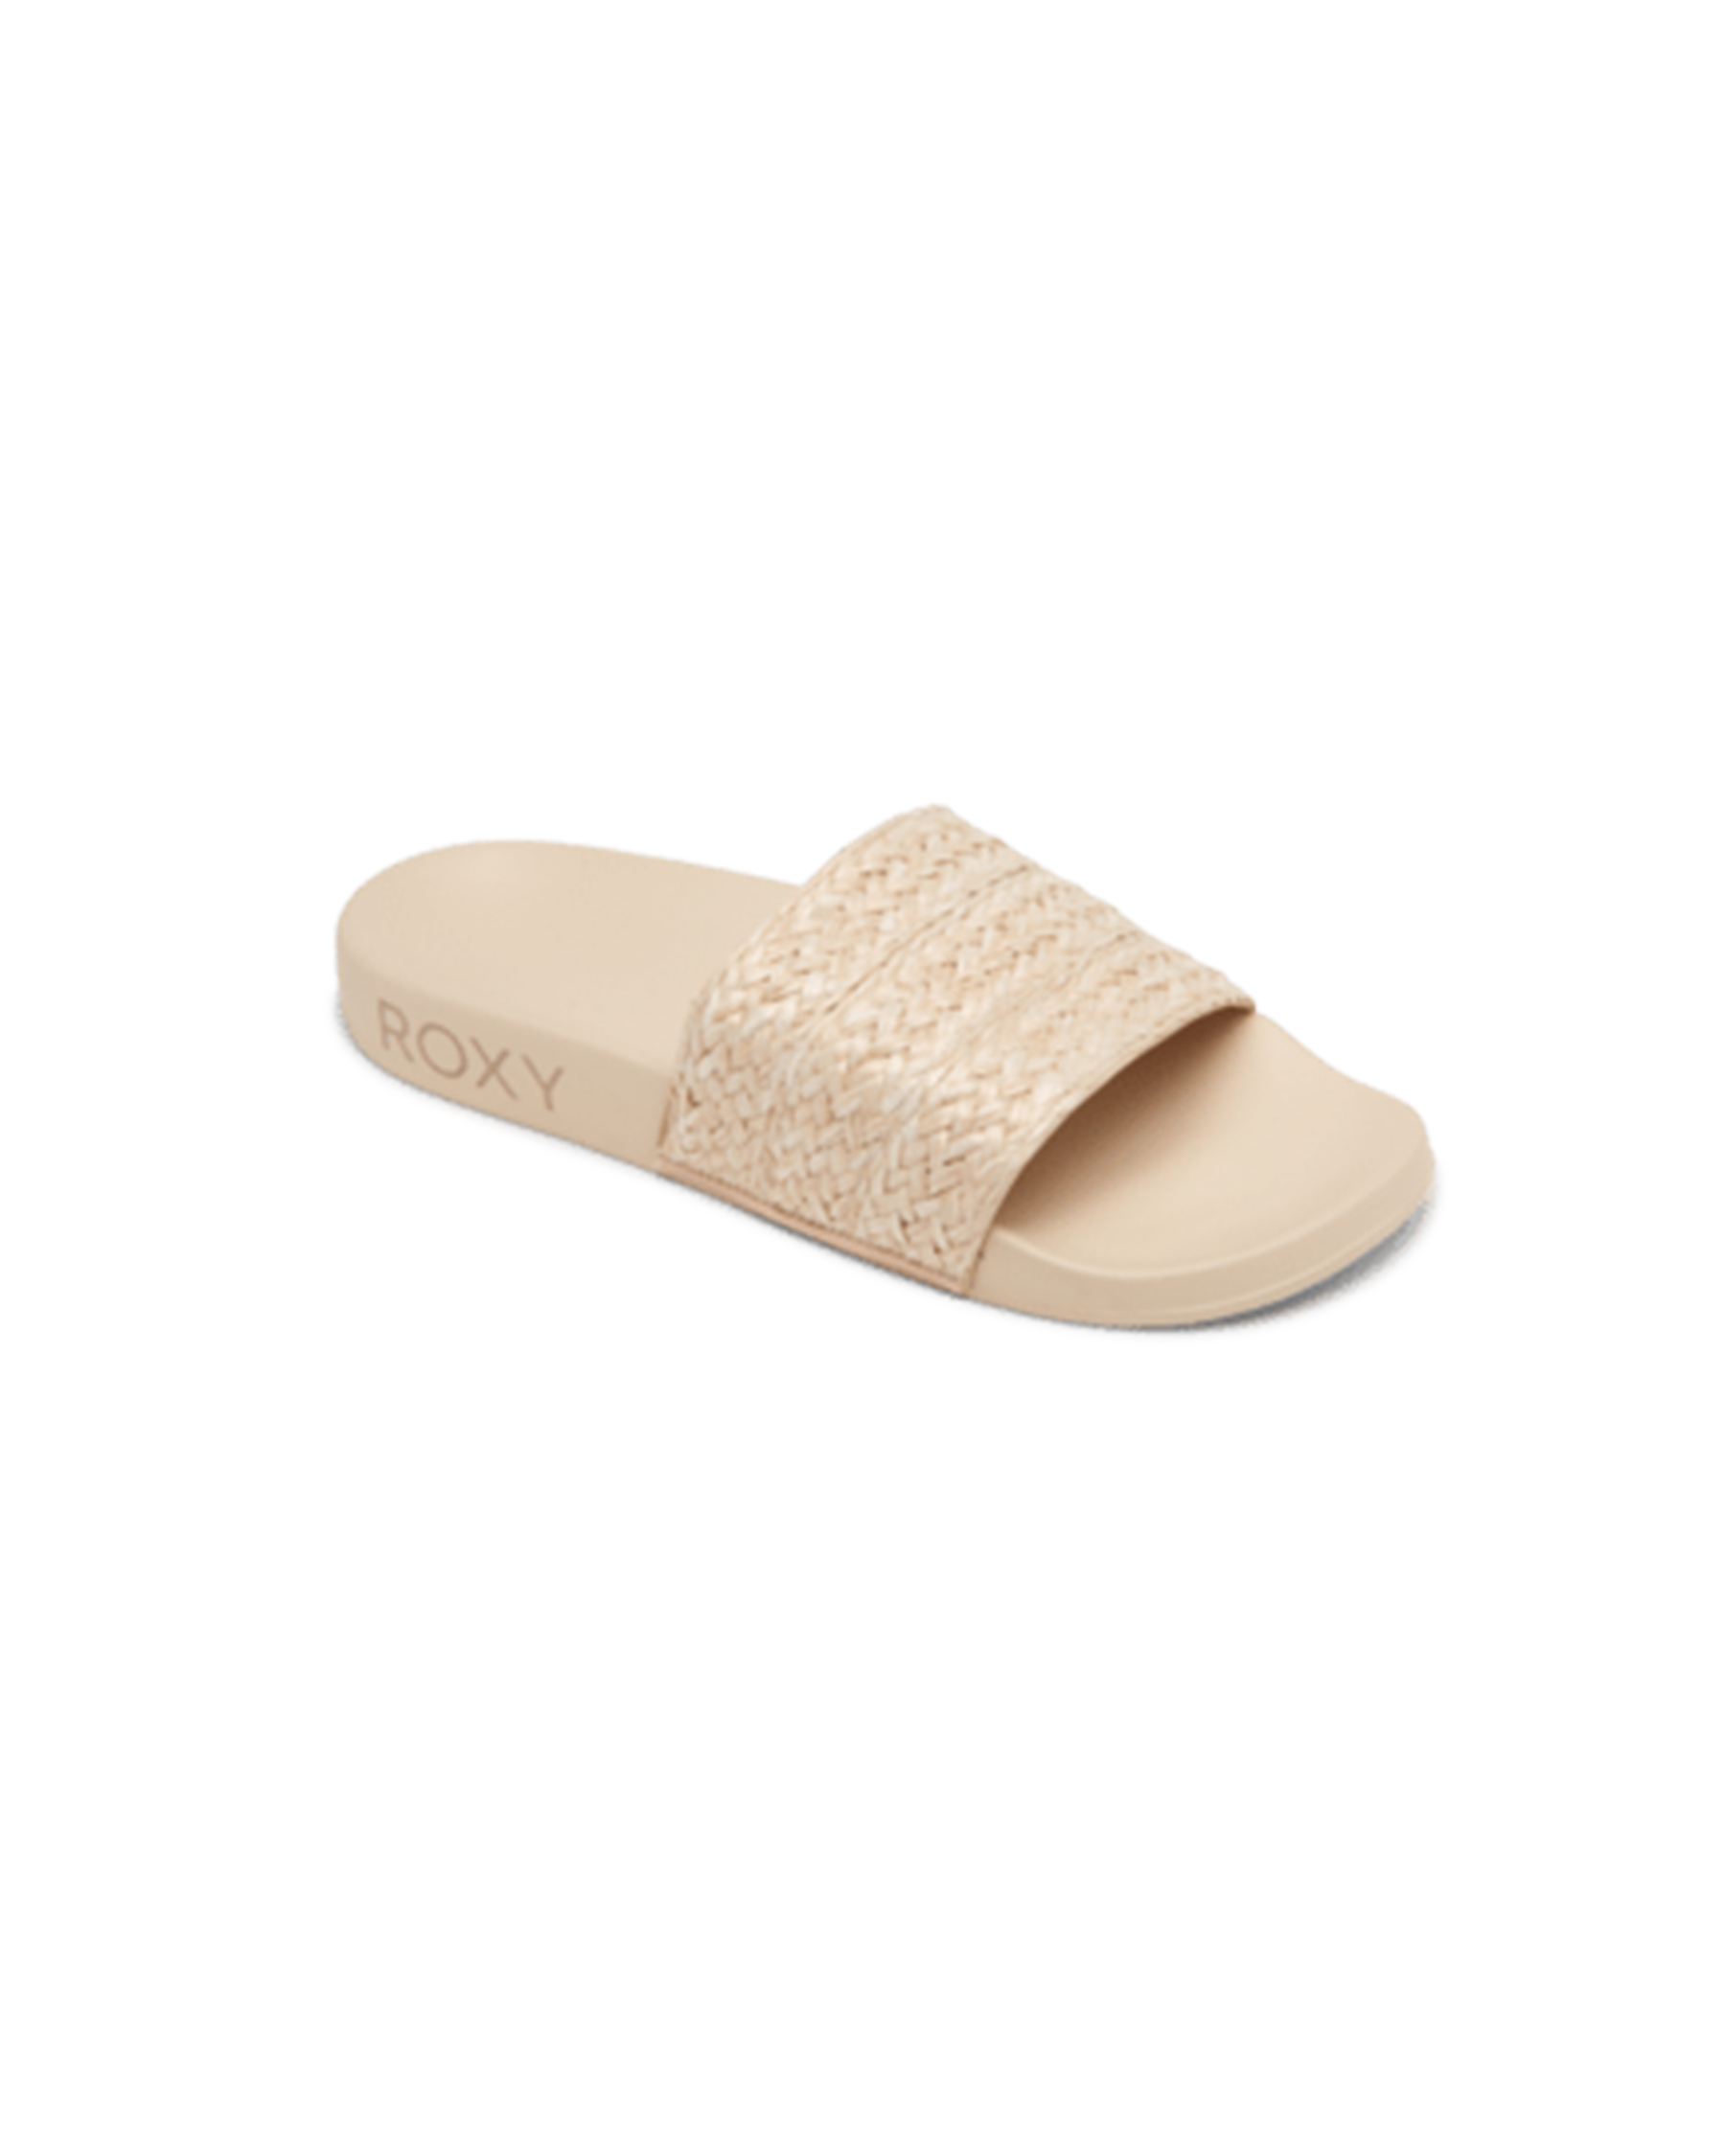 ROXY SLIPPY JUTE Sandals Cream ARJL100955 - View2